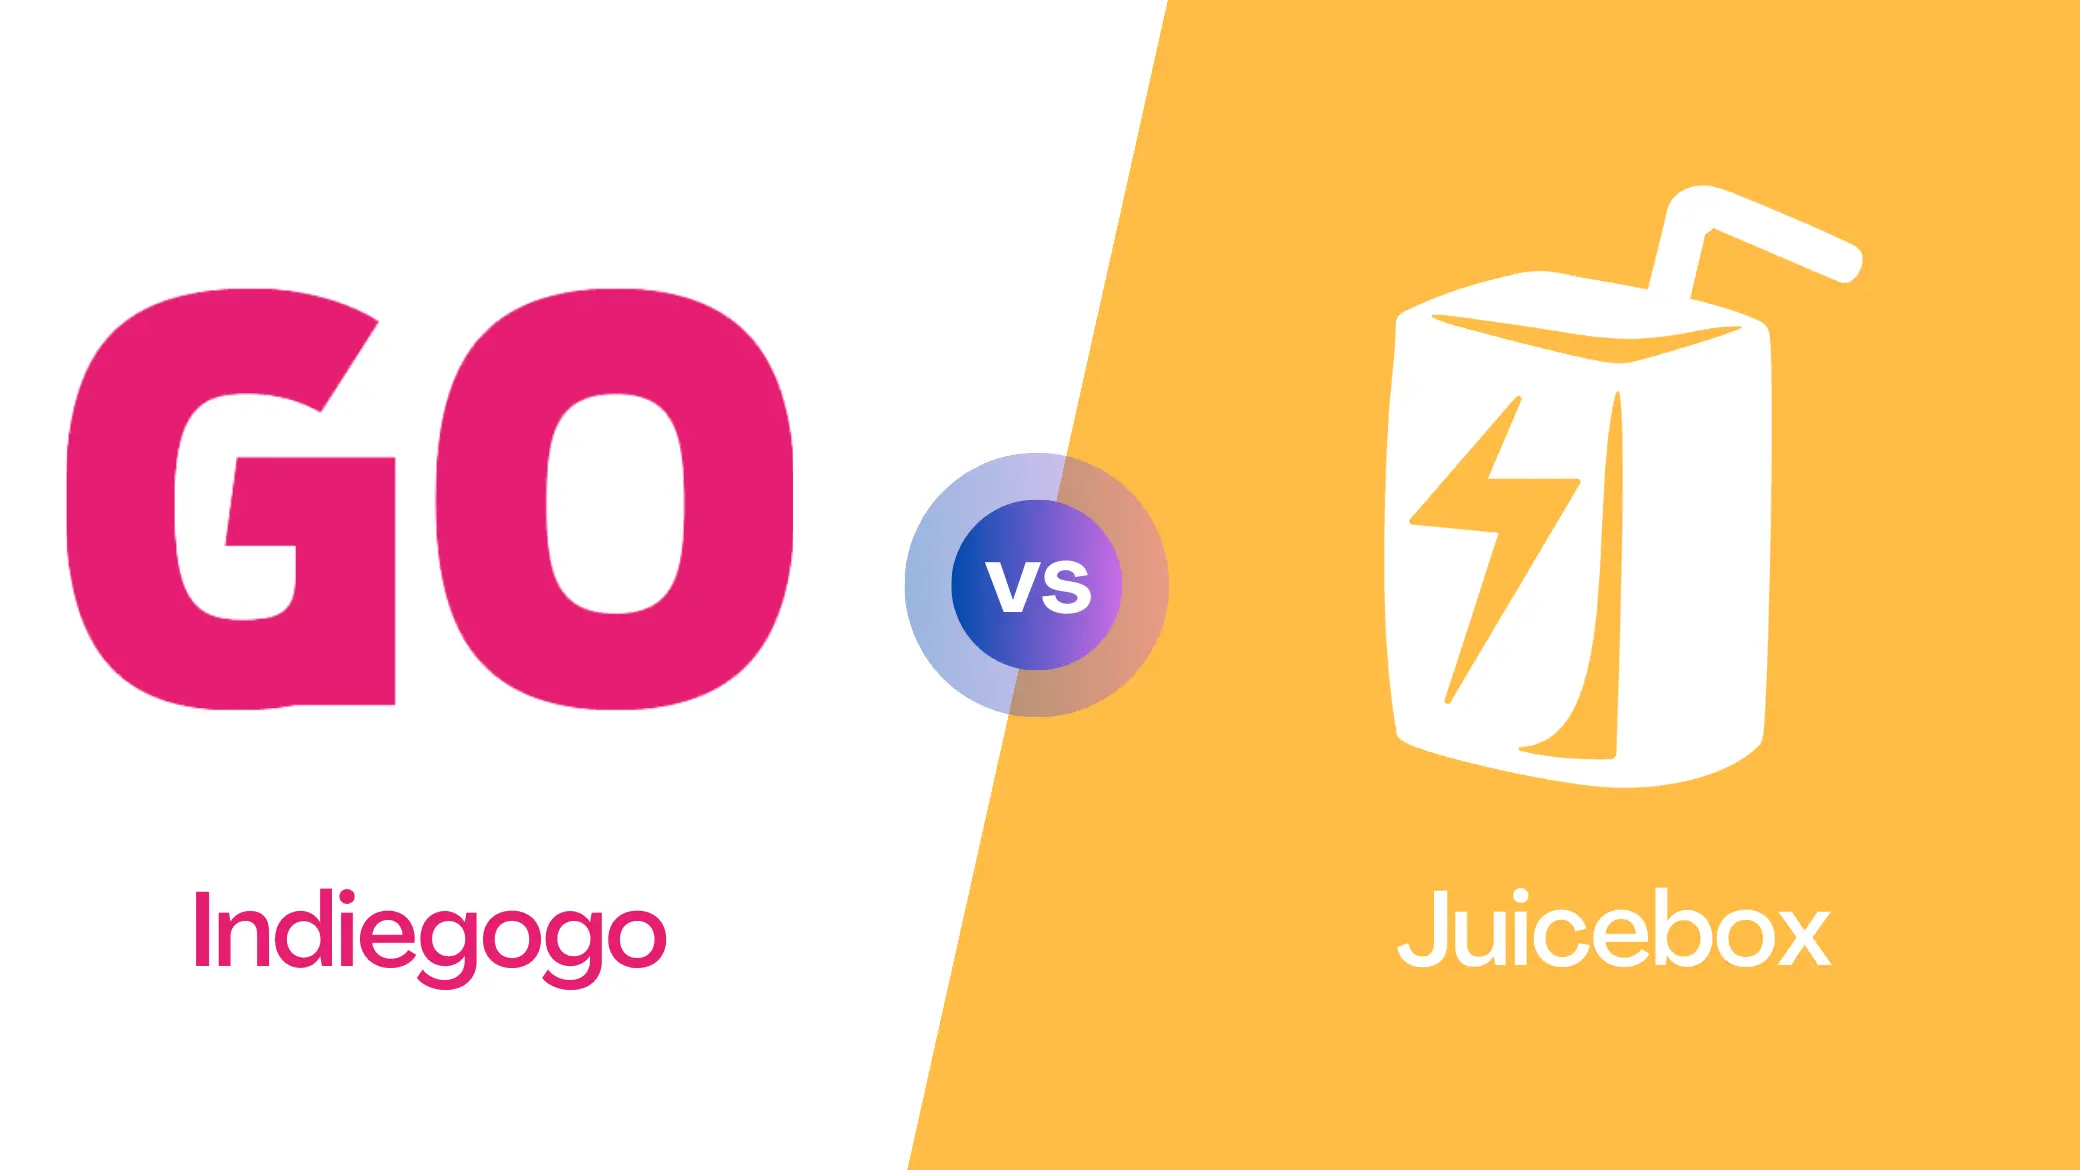 Indiegogo vs Juicebox